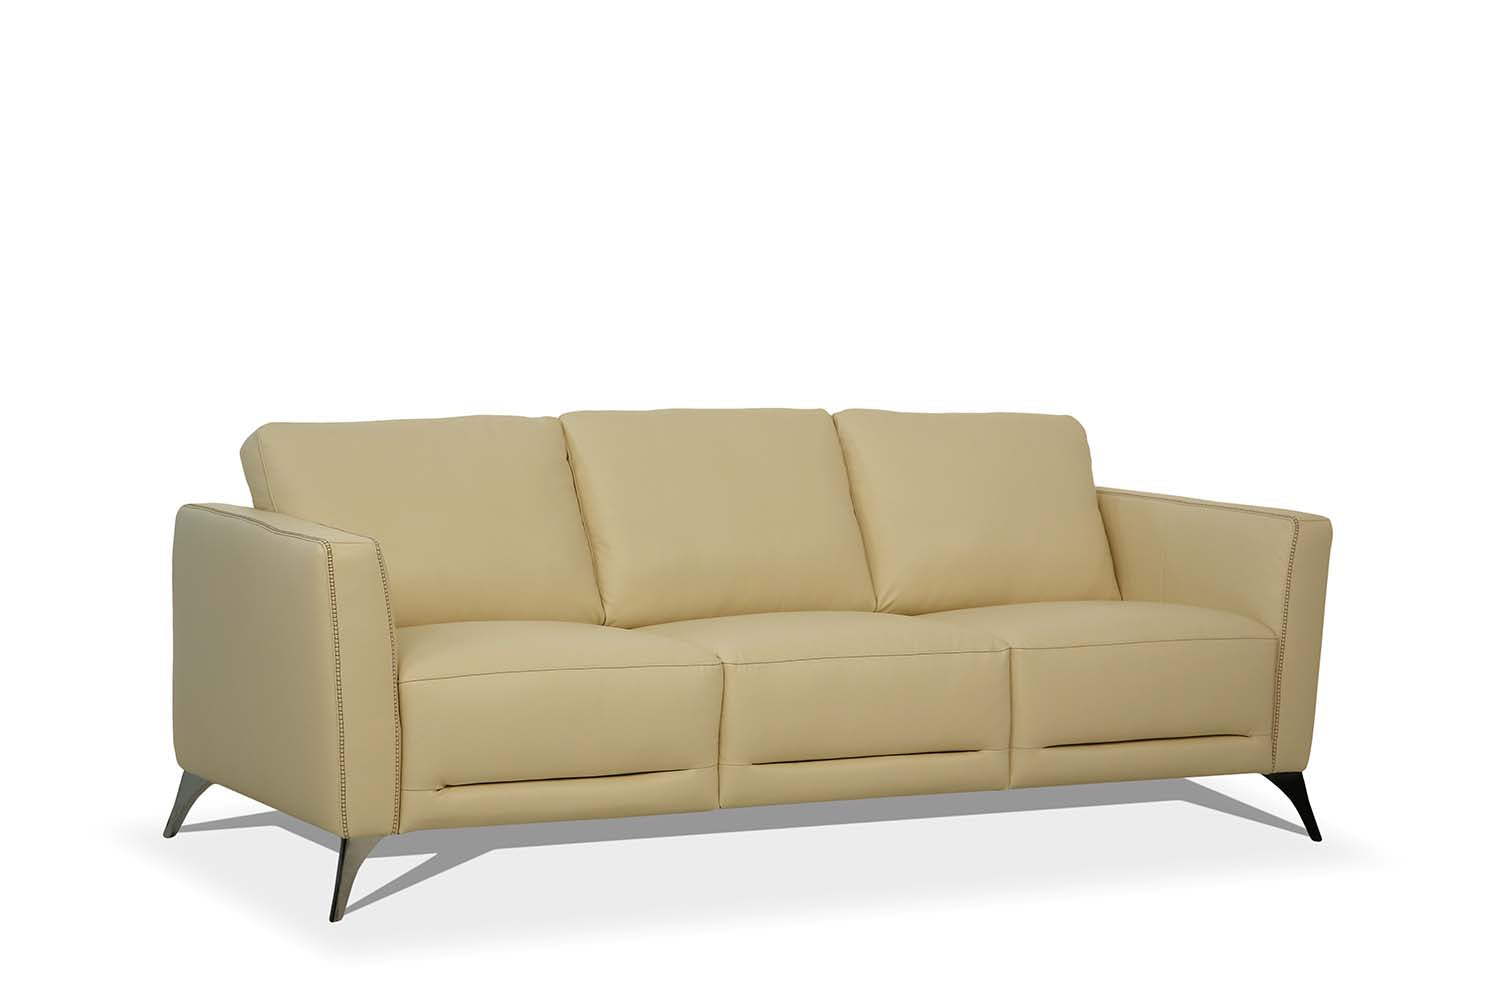 ACME Furniture Sofas & Couches - Sofa, Cream Leather 55005